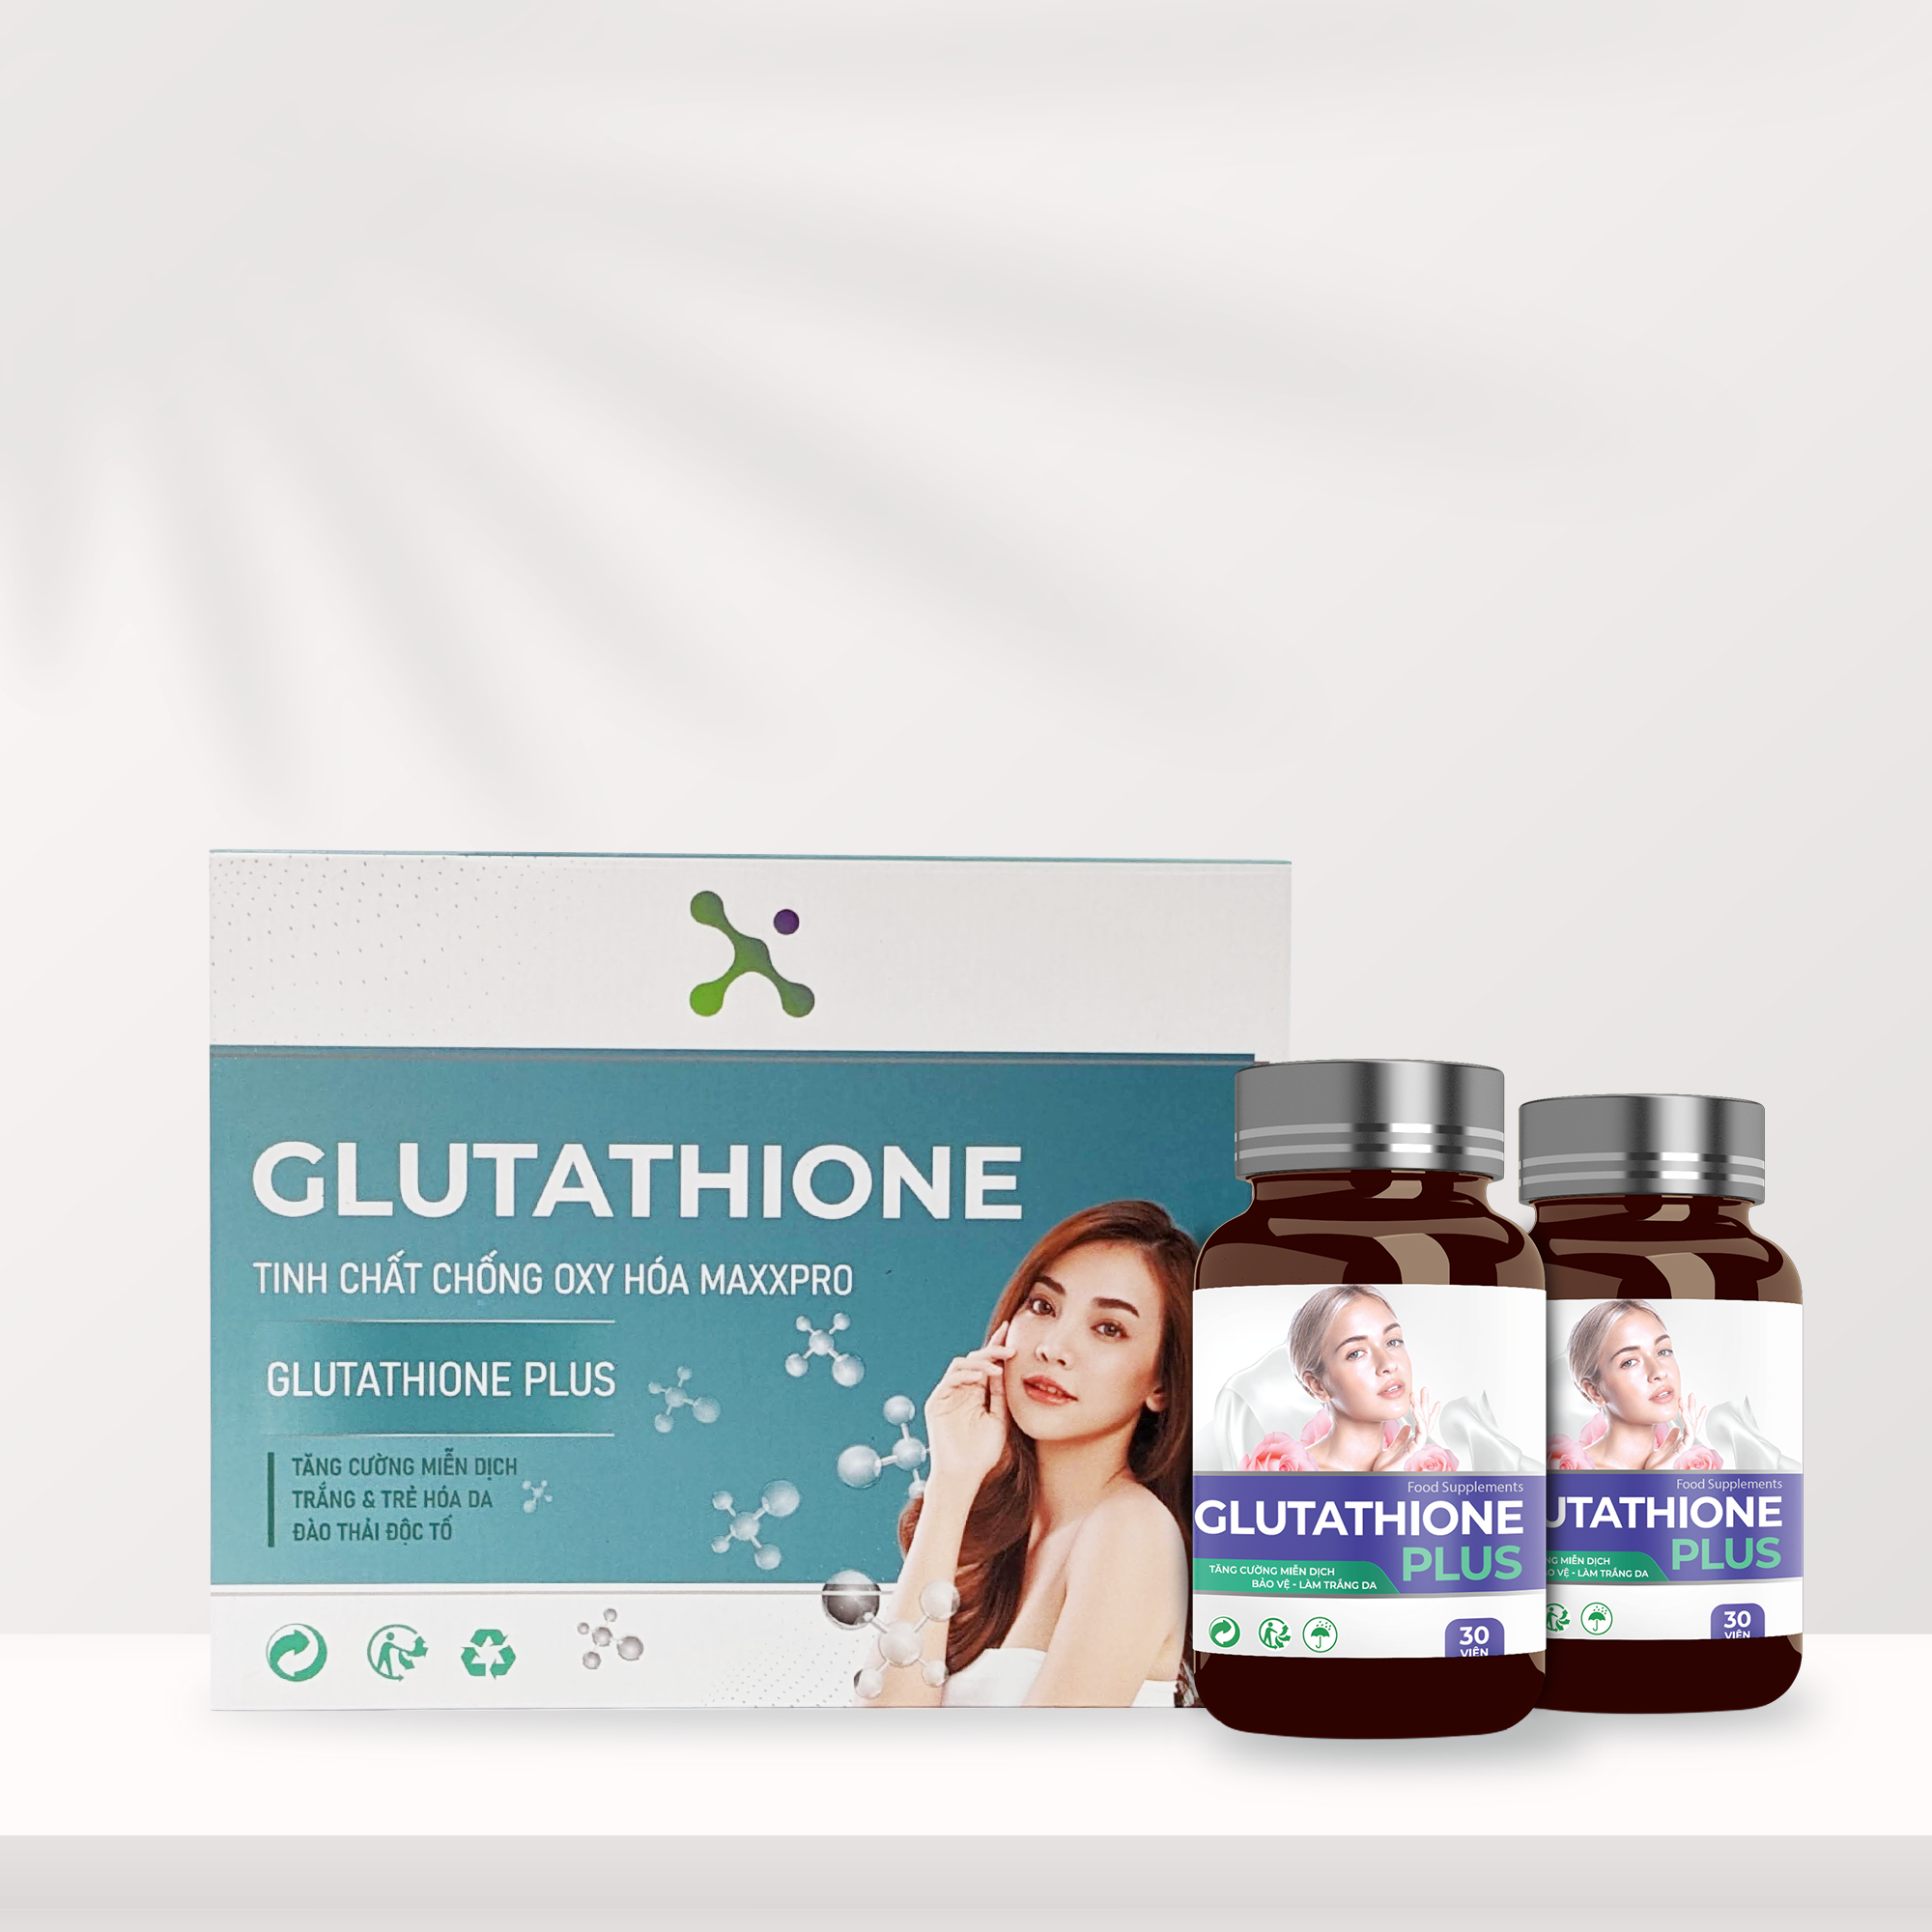 GLUTATHIONE PLUS - Tinh chất chống oxy hoá maxxpro